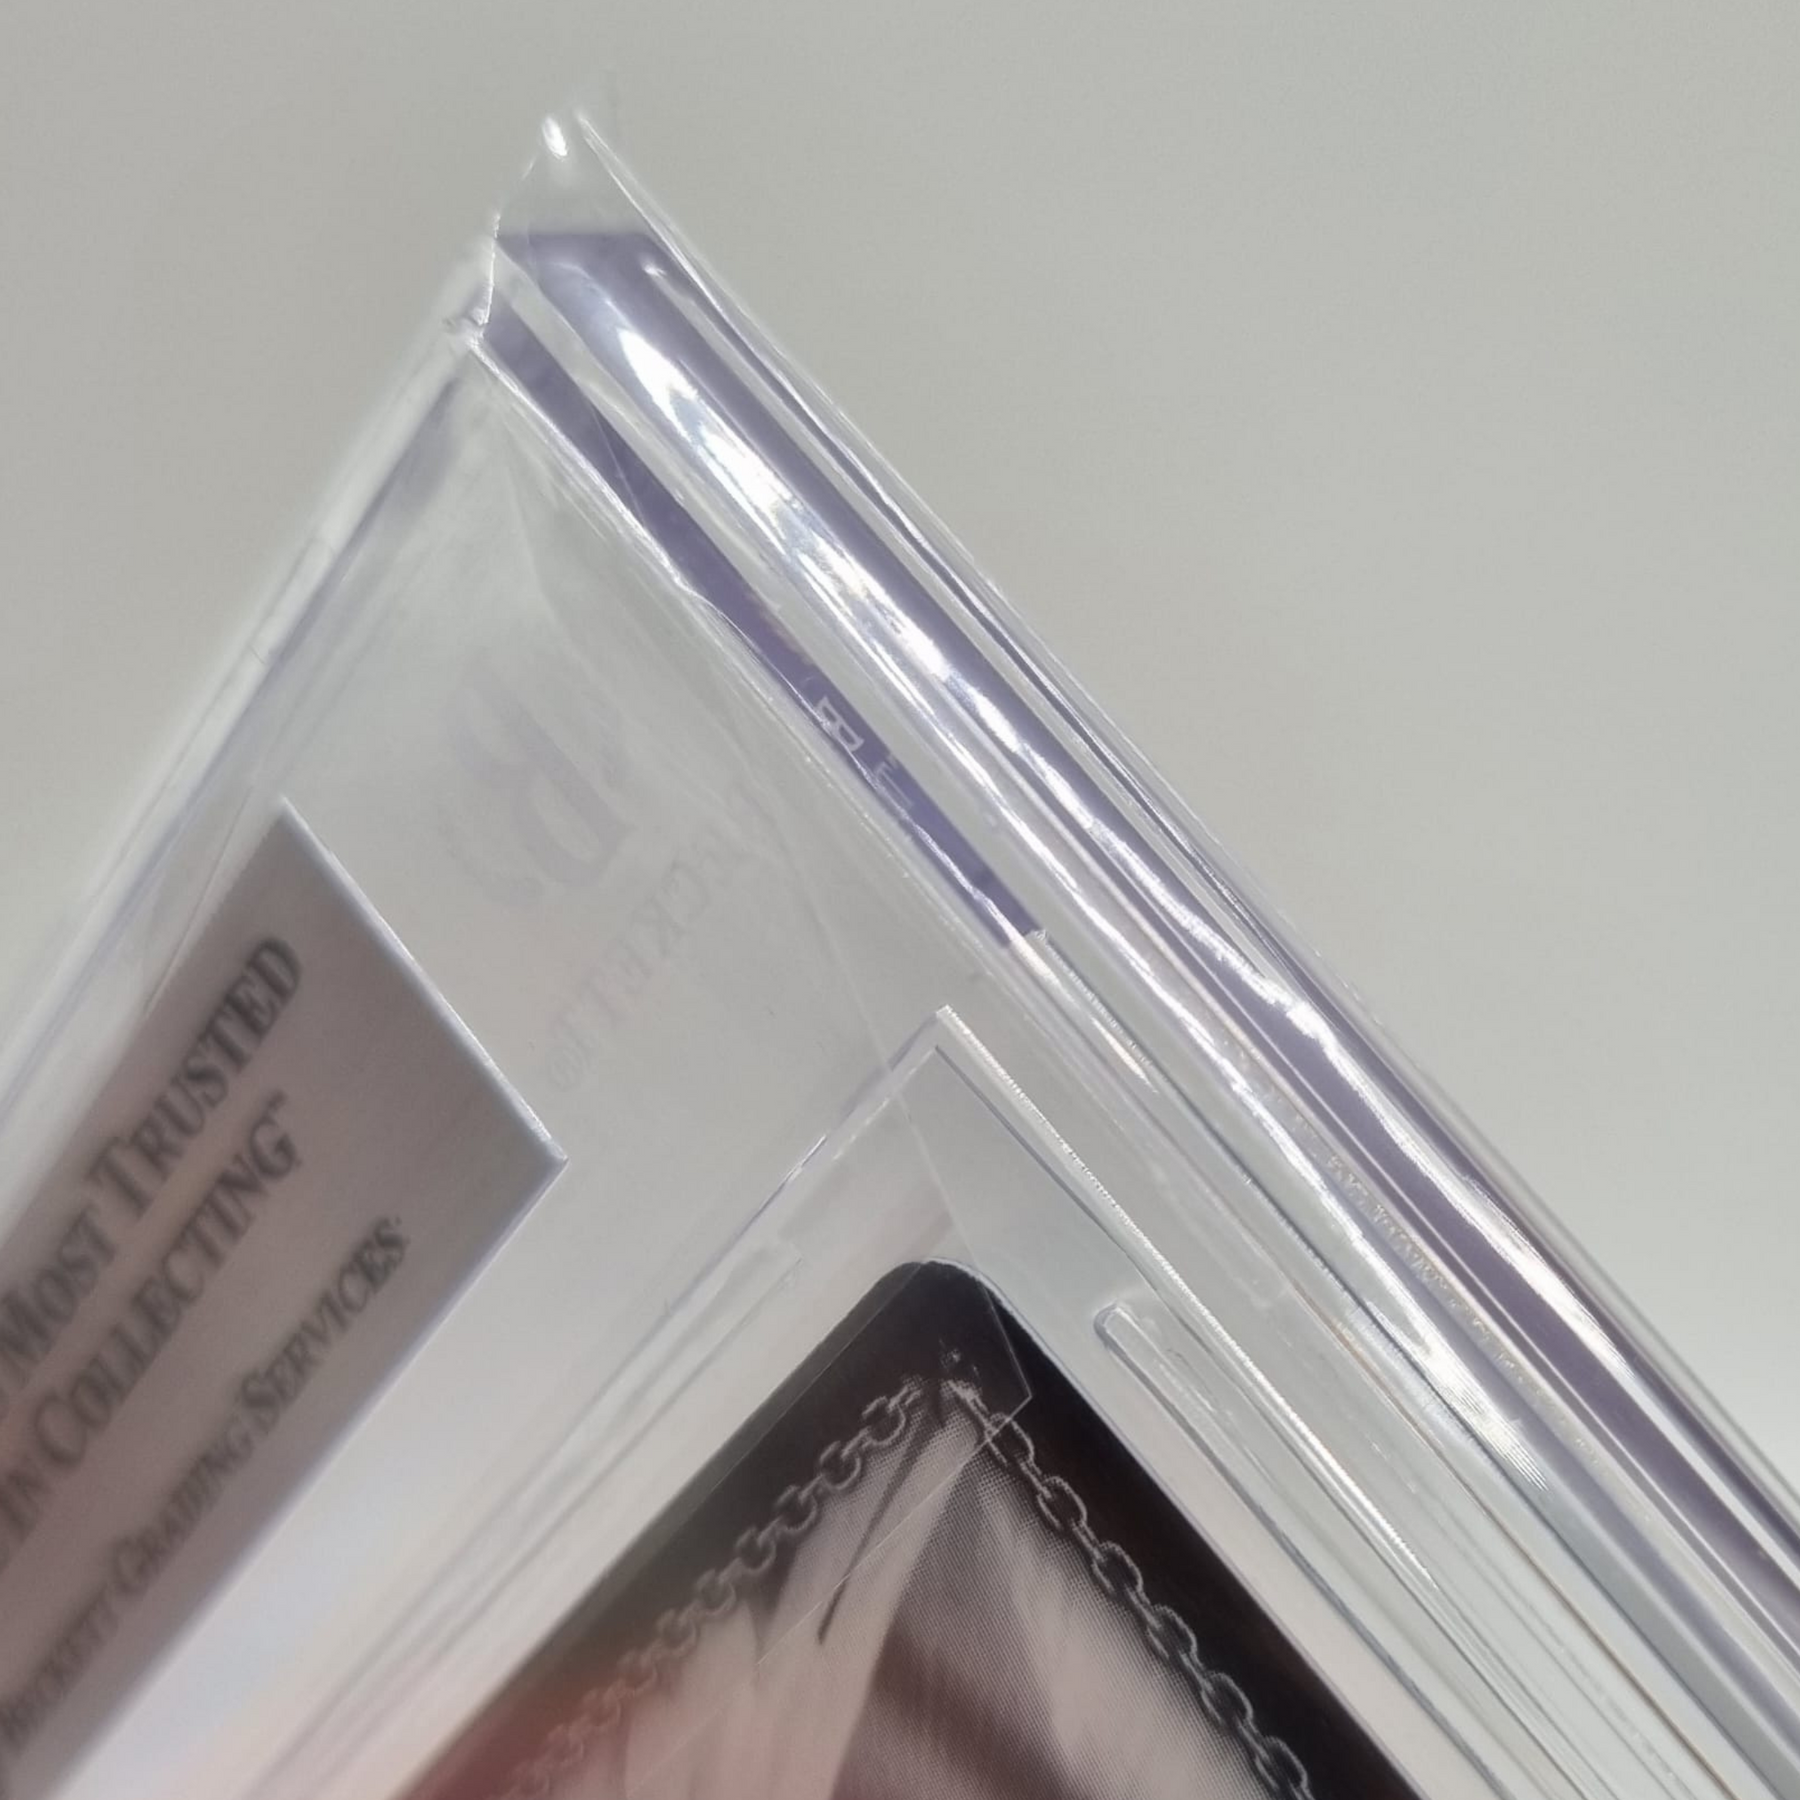 Pochettes - Ultra Pro - Graded Card Sleeves - Protèges Boîtier PSA/Beckett  - Transparent - par 100